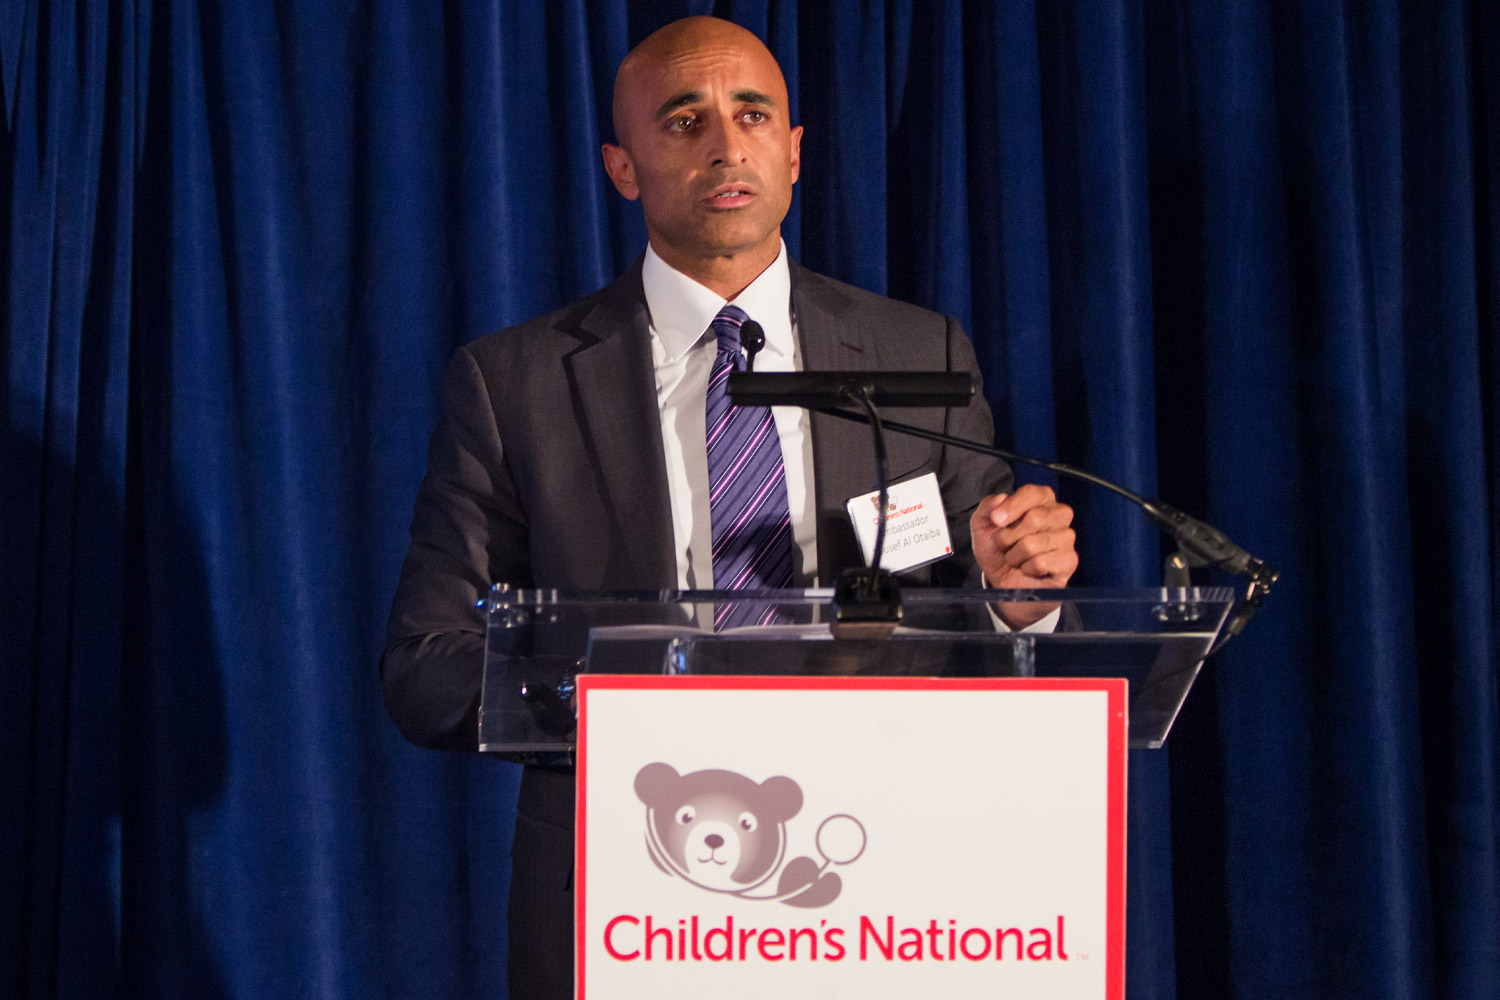 UAE Ambassador Yousef Al Otaiba honors the Children’s National Hospital in Washington DC